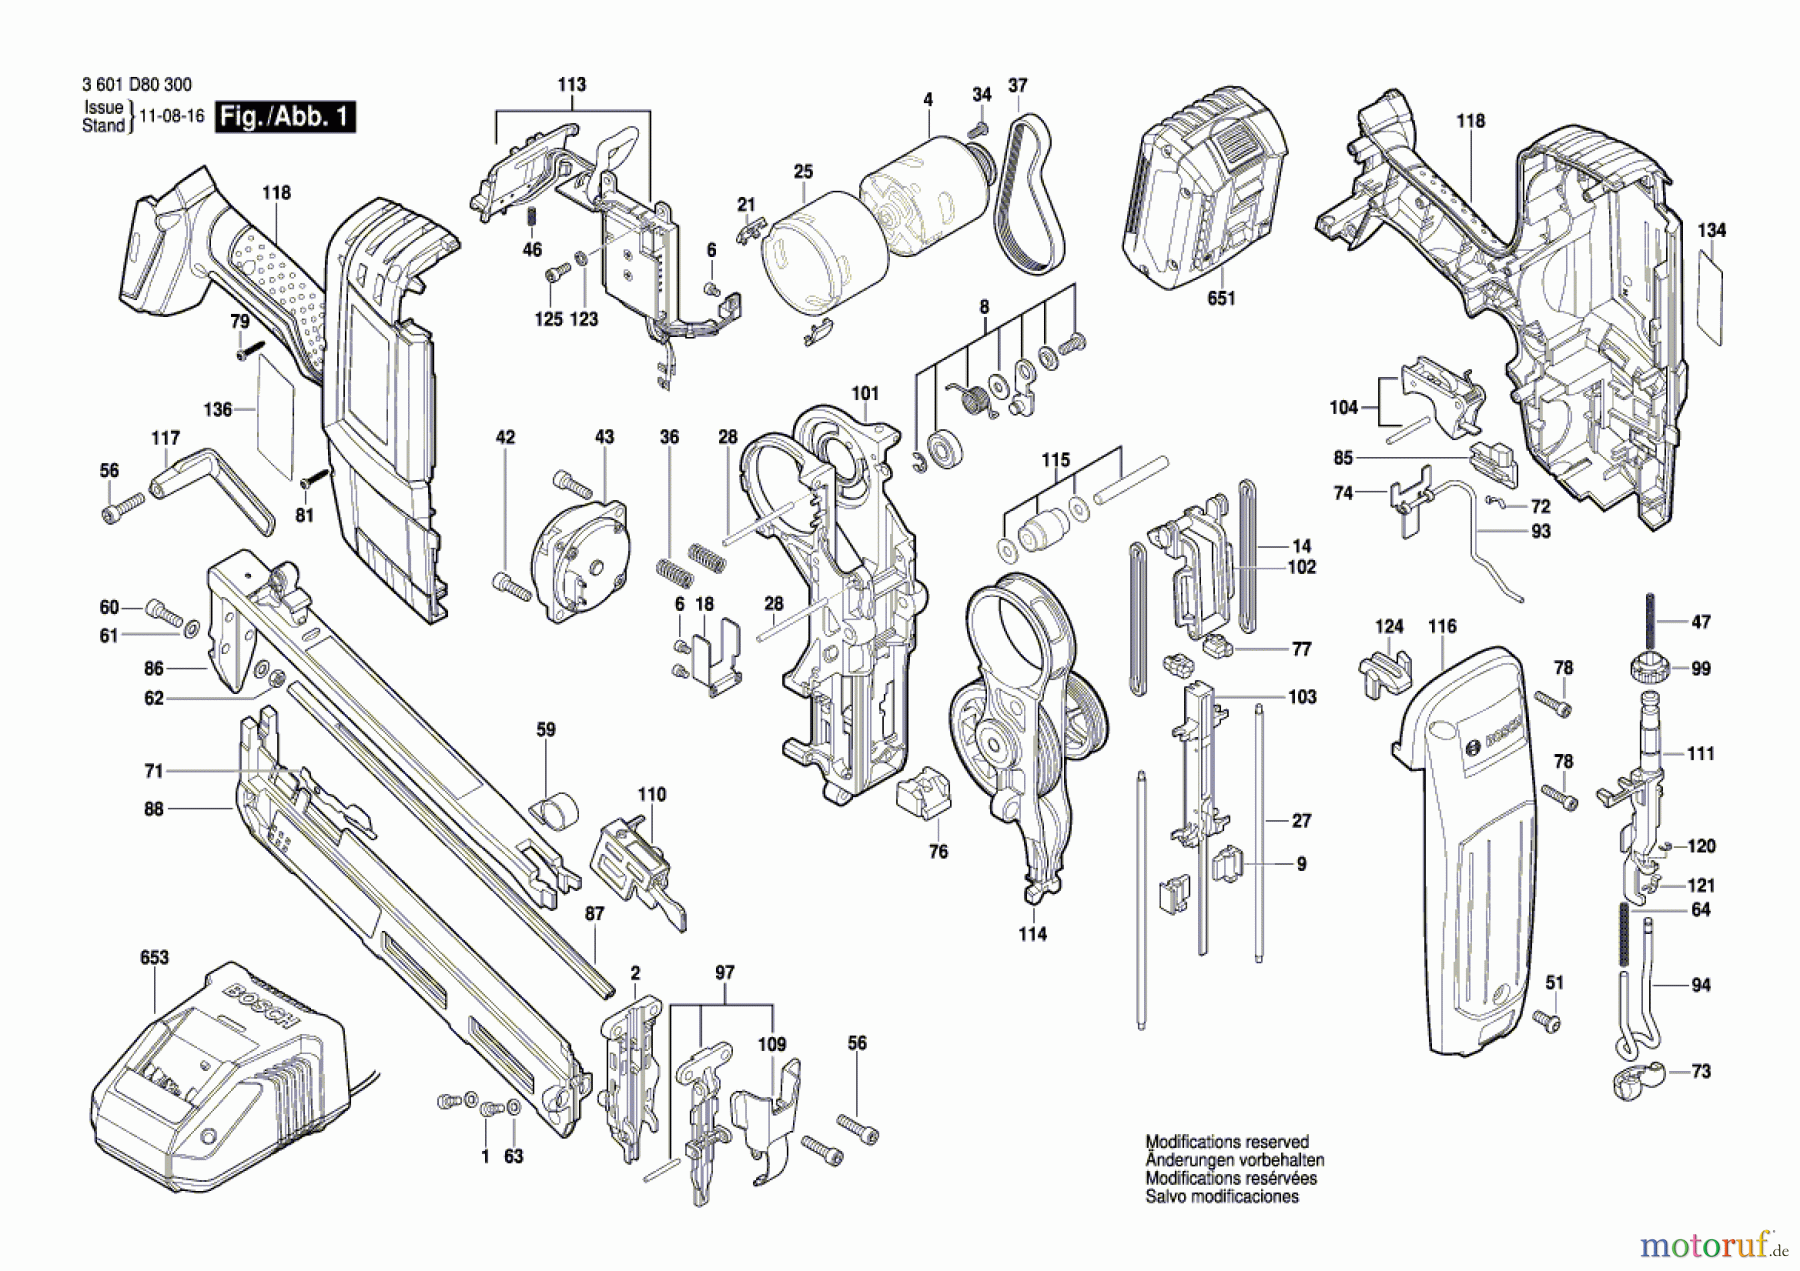  Bosch Werkzeug Nagler GSK 18 V-LI Seite 1